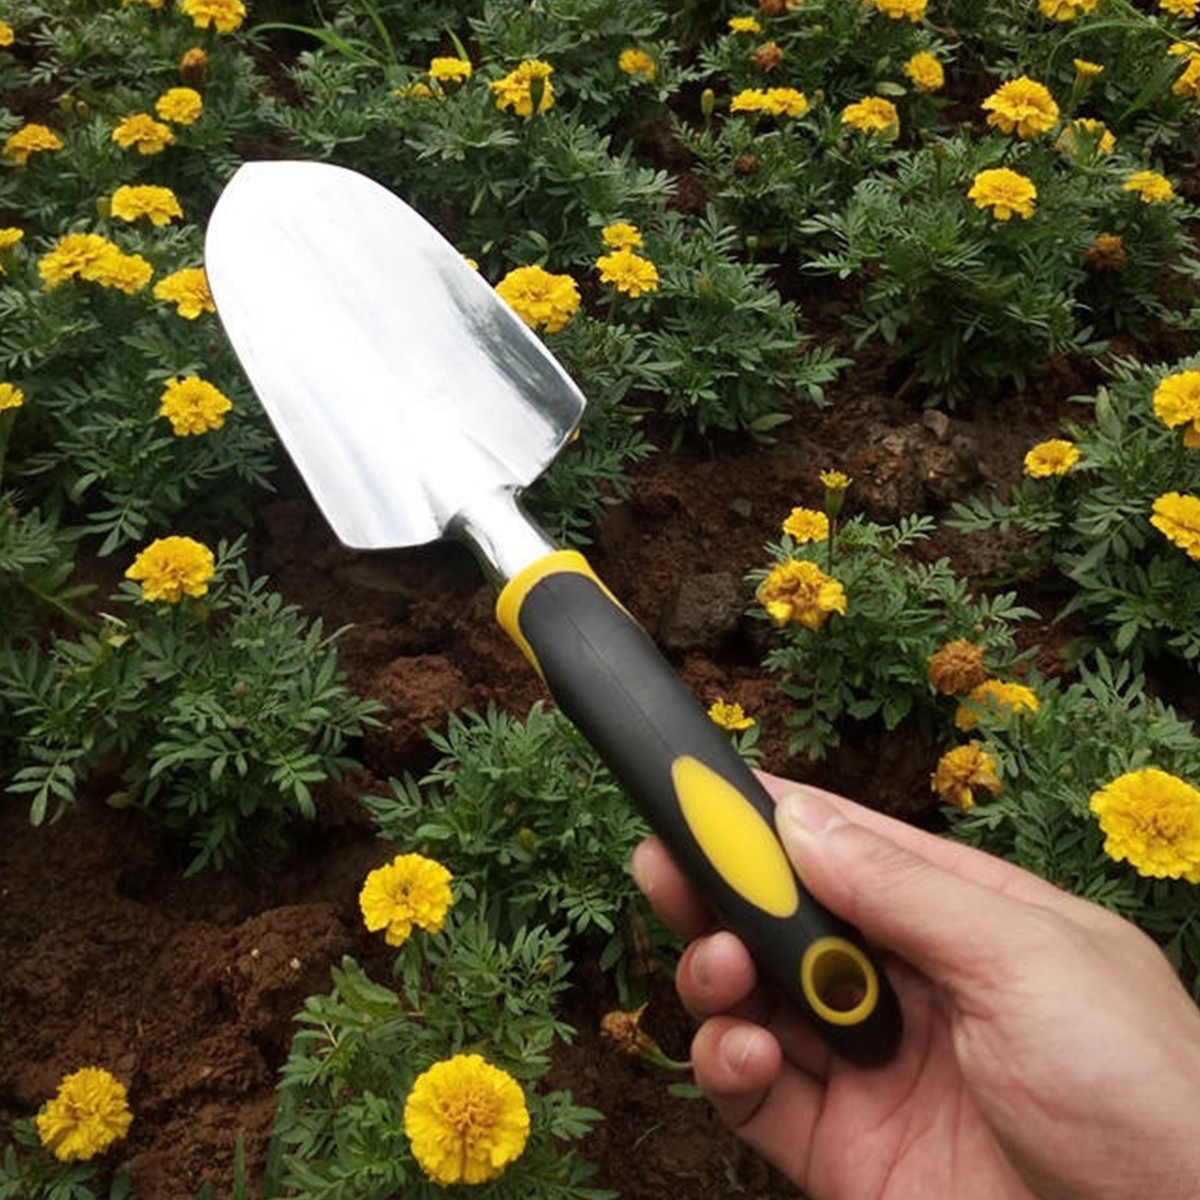 9Pcs Gardening Plant Tool Set Garden Yard Plant Flower Care Hand Tools w/ Case 